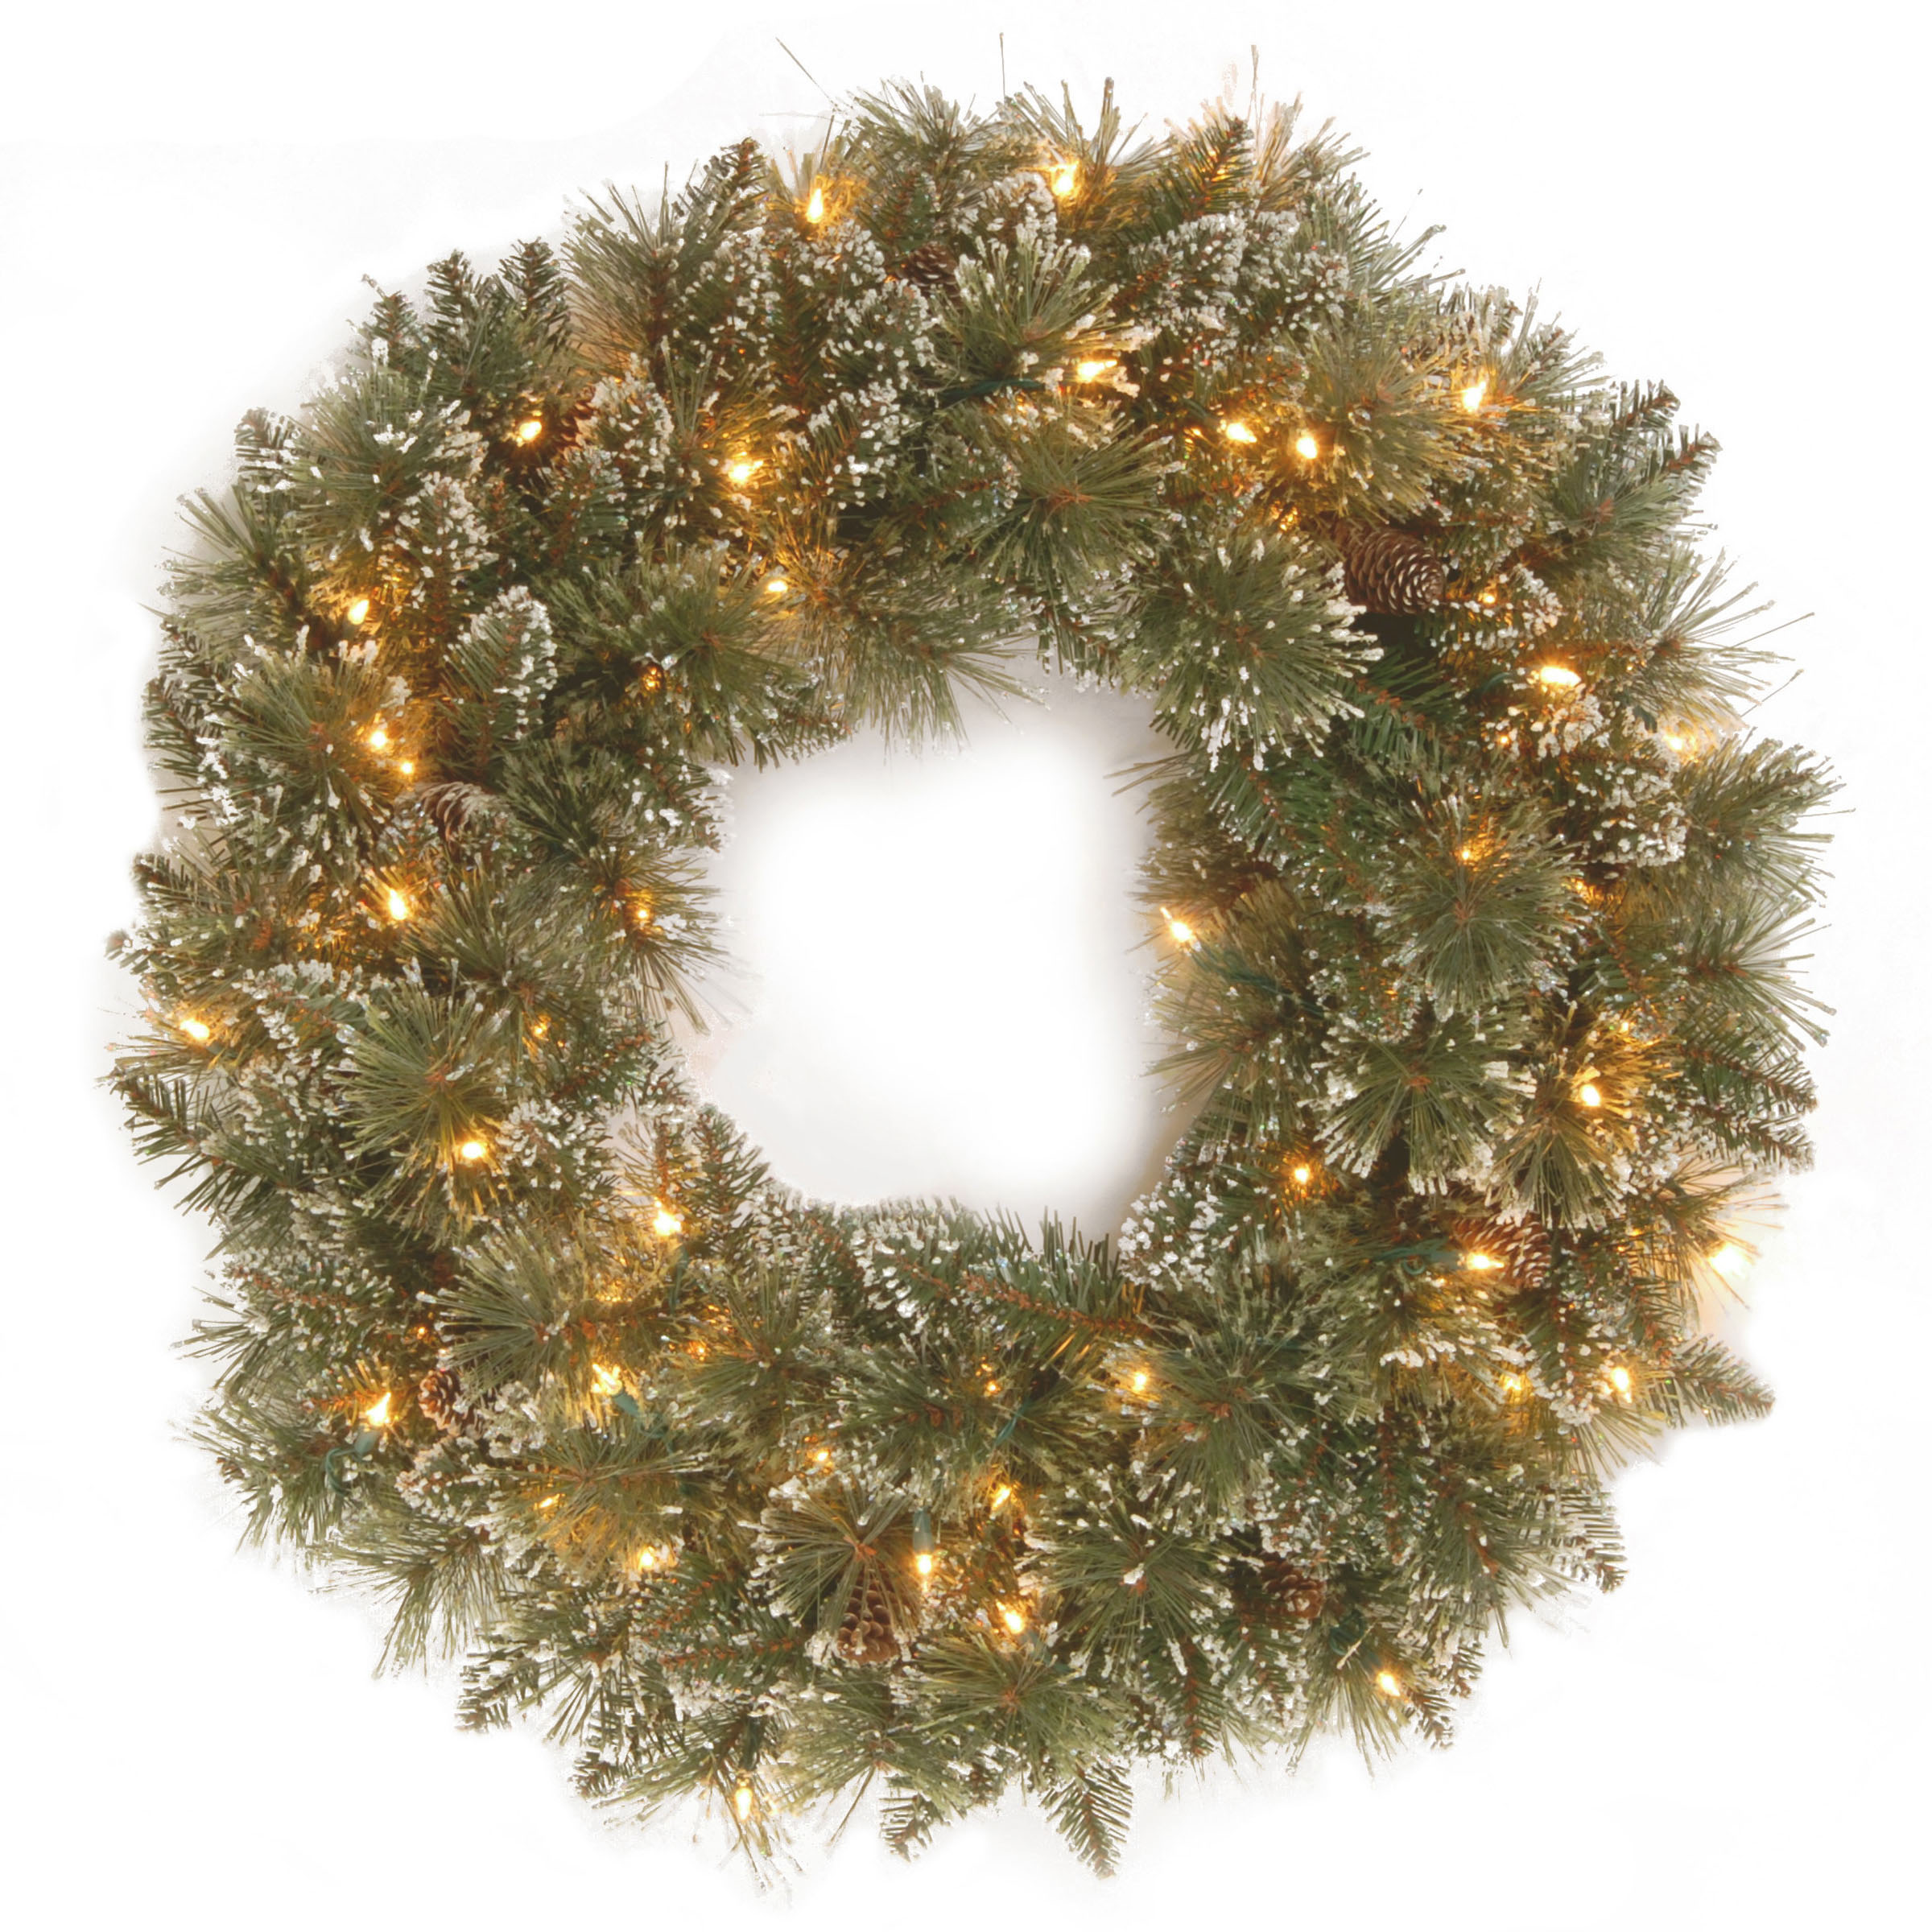 24 Inch Glittery Bristle Pine Wreath: Cones & Clear Leds